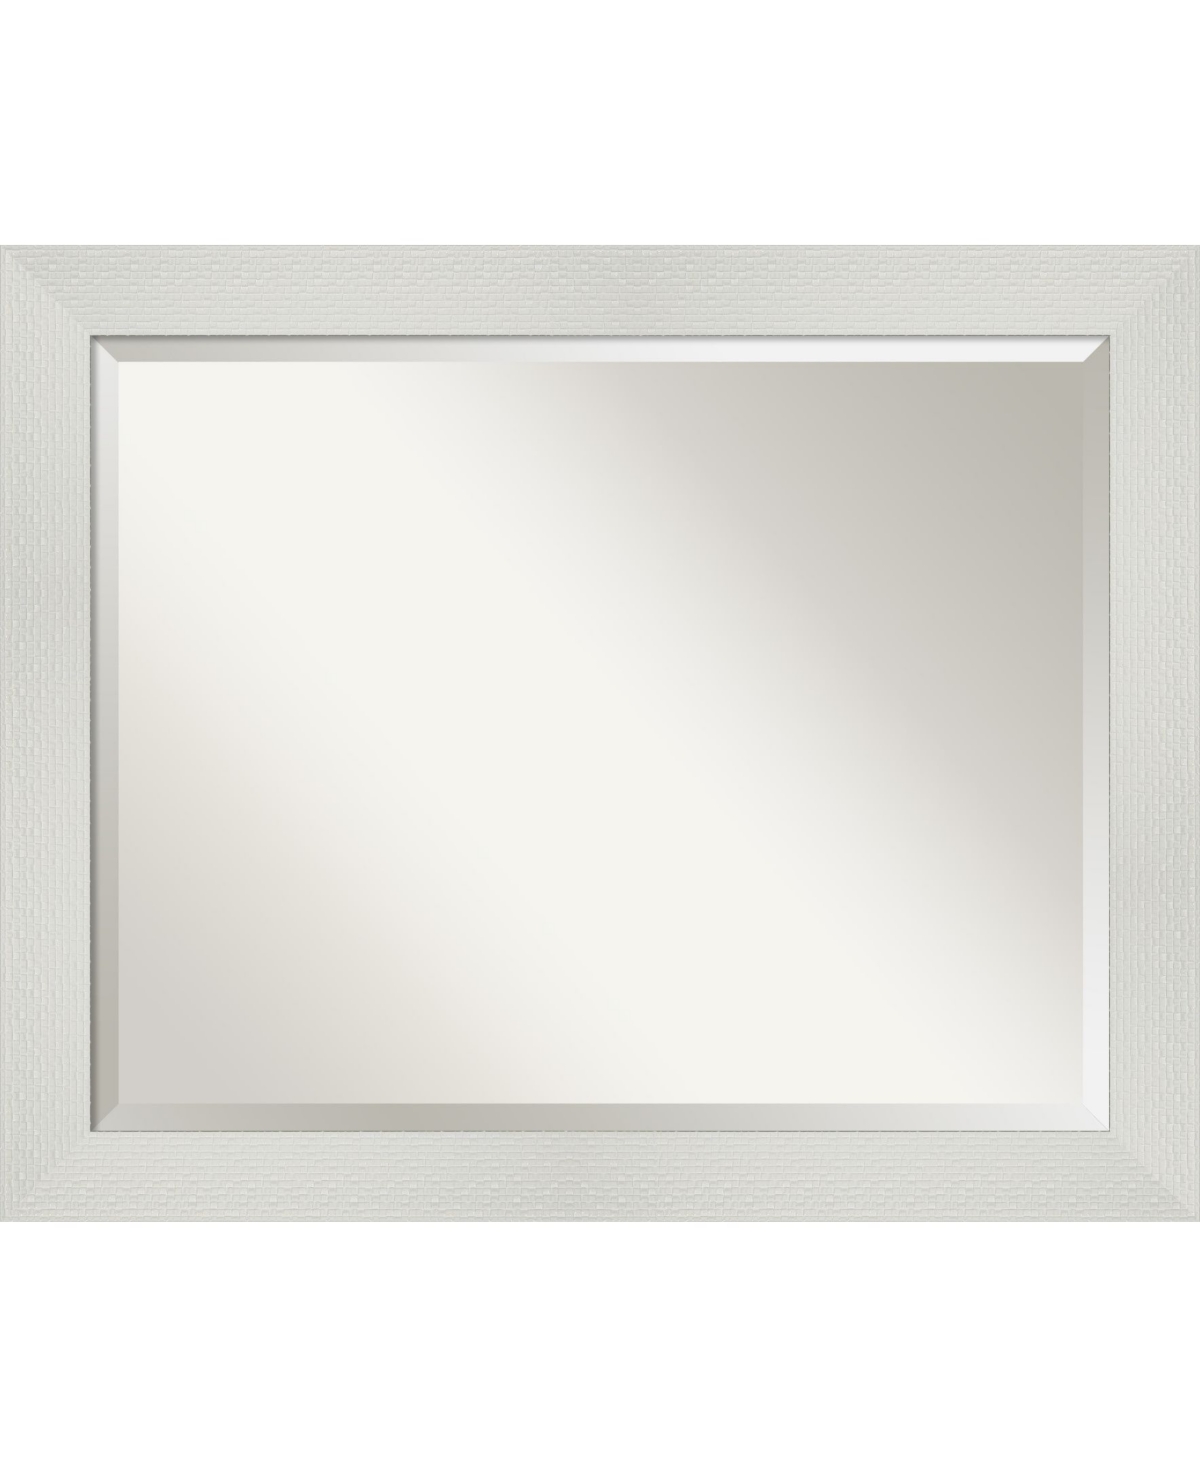 Mosaic Framed Bathroom Vanity Wall Mirror, 32.25" x 26.25" - White